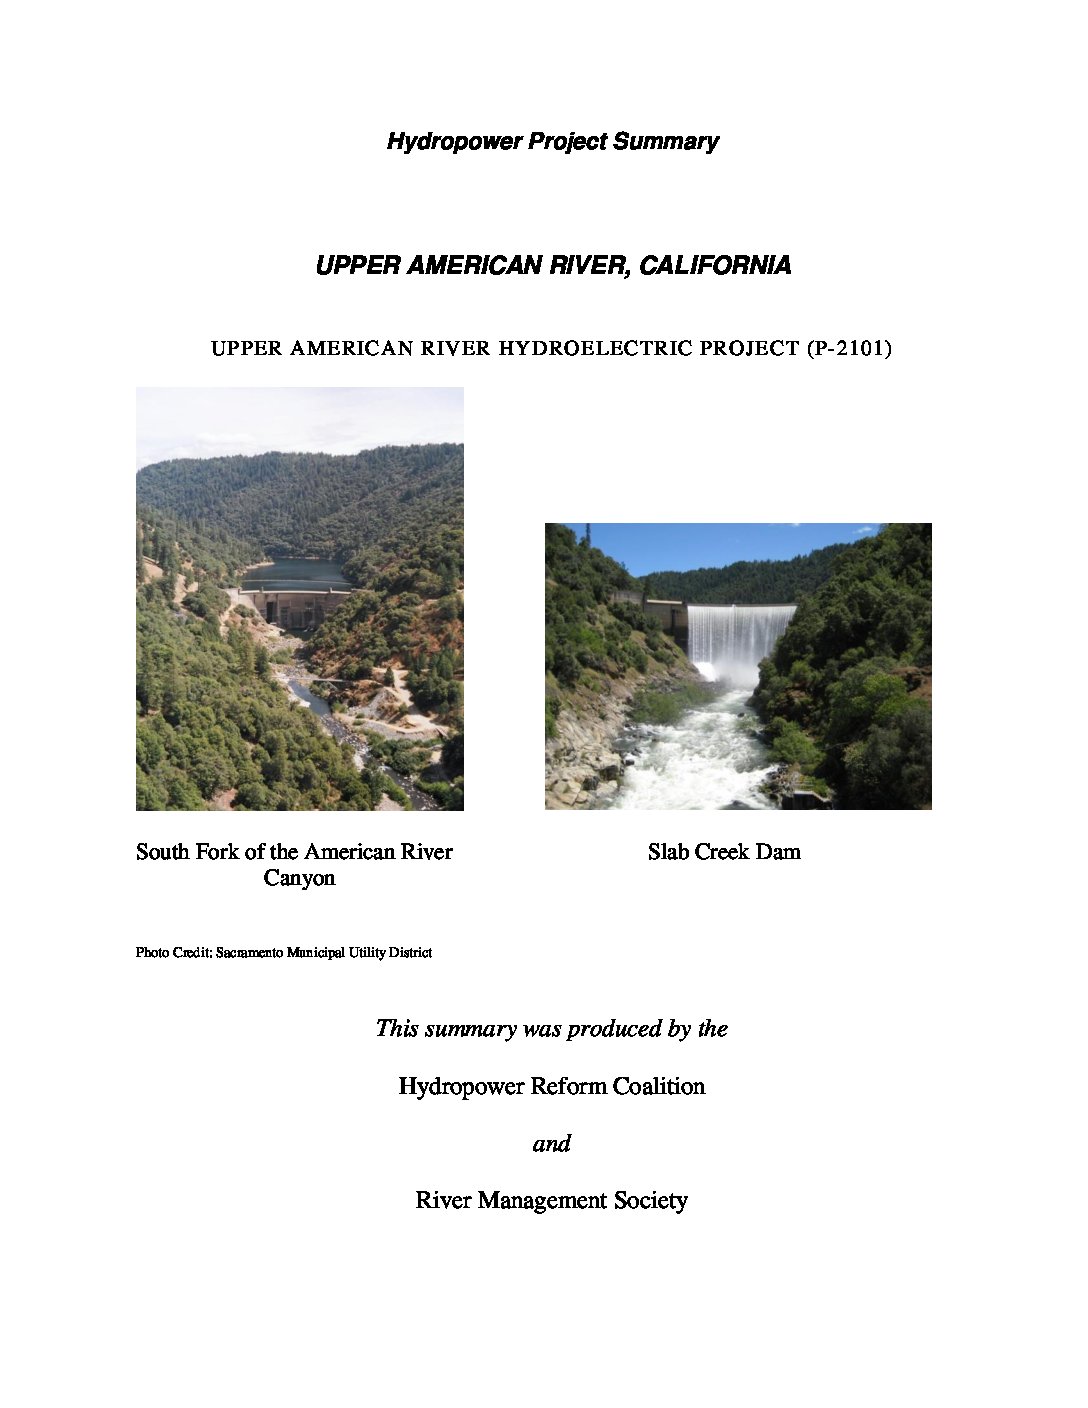 Upper American Project, Upper American River, California